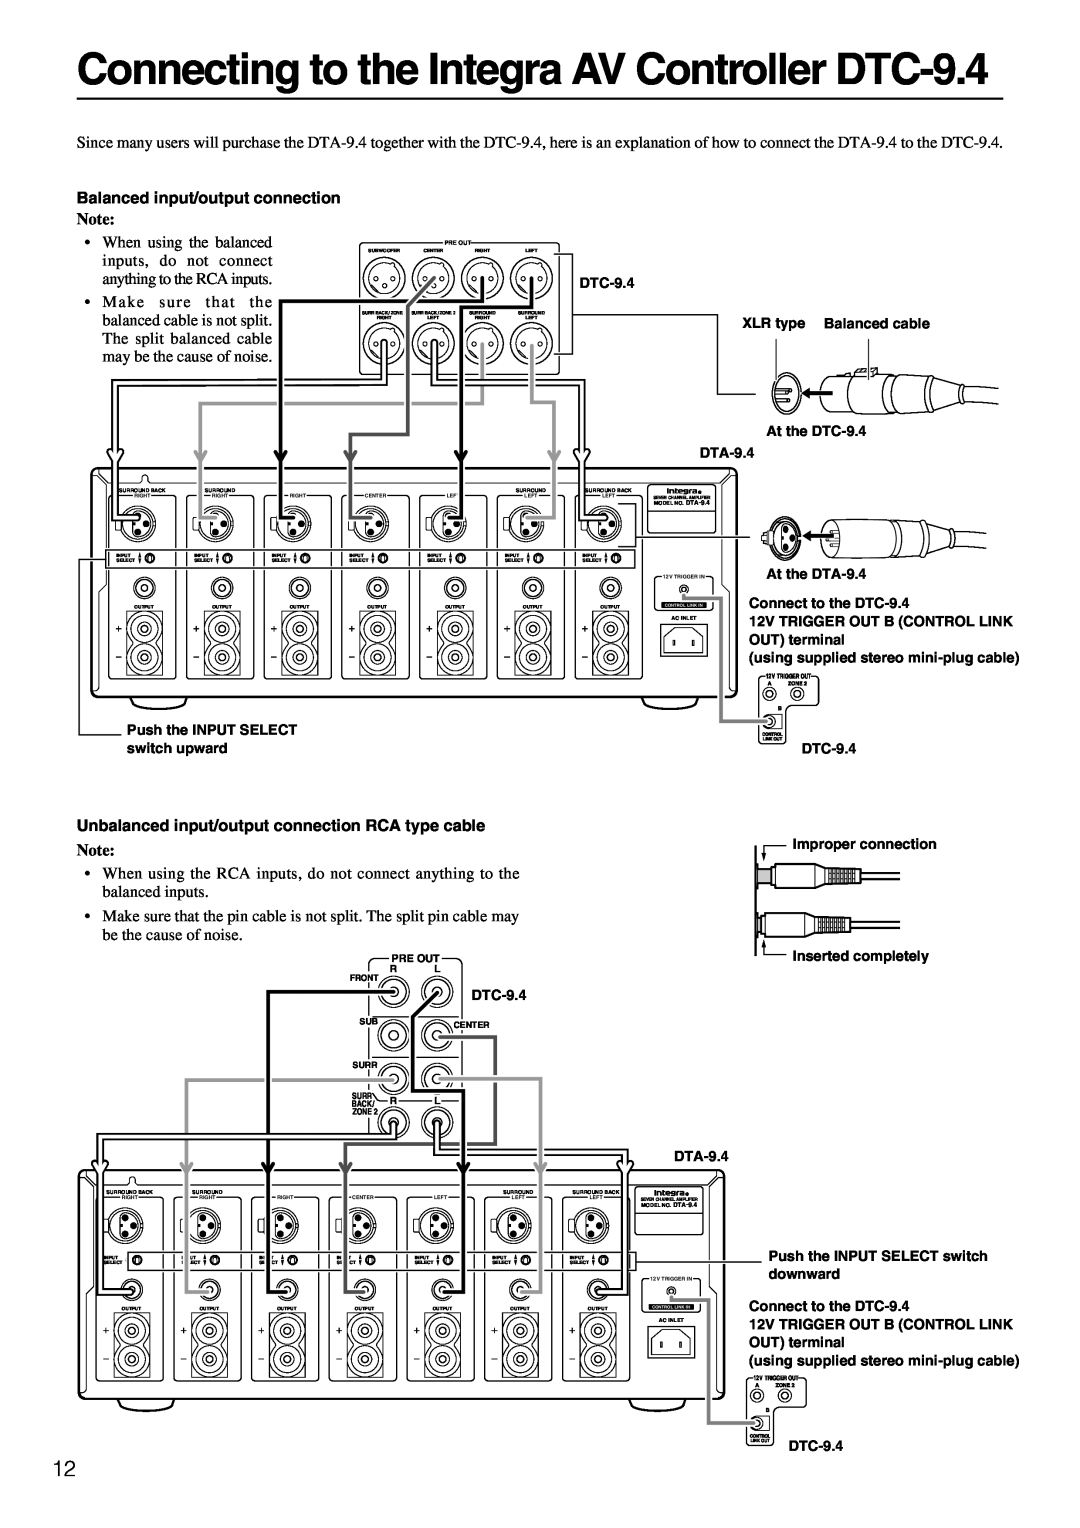 Integra DTA-9.4 instruction manual Connecting to the Integra AV Controller DTC-9.4, Balanced input/output connection 